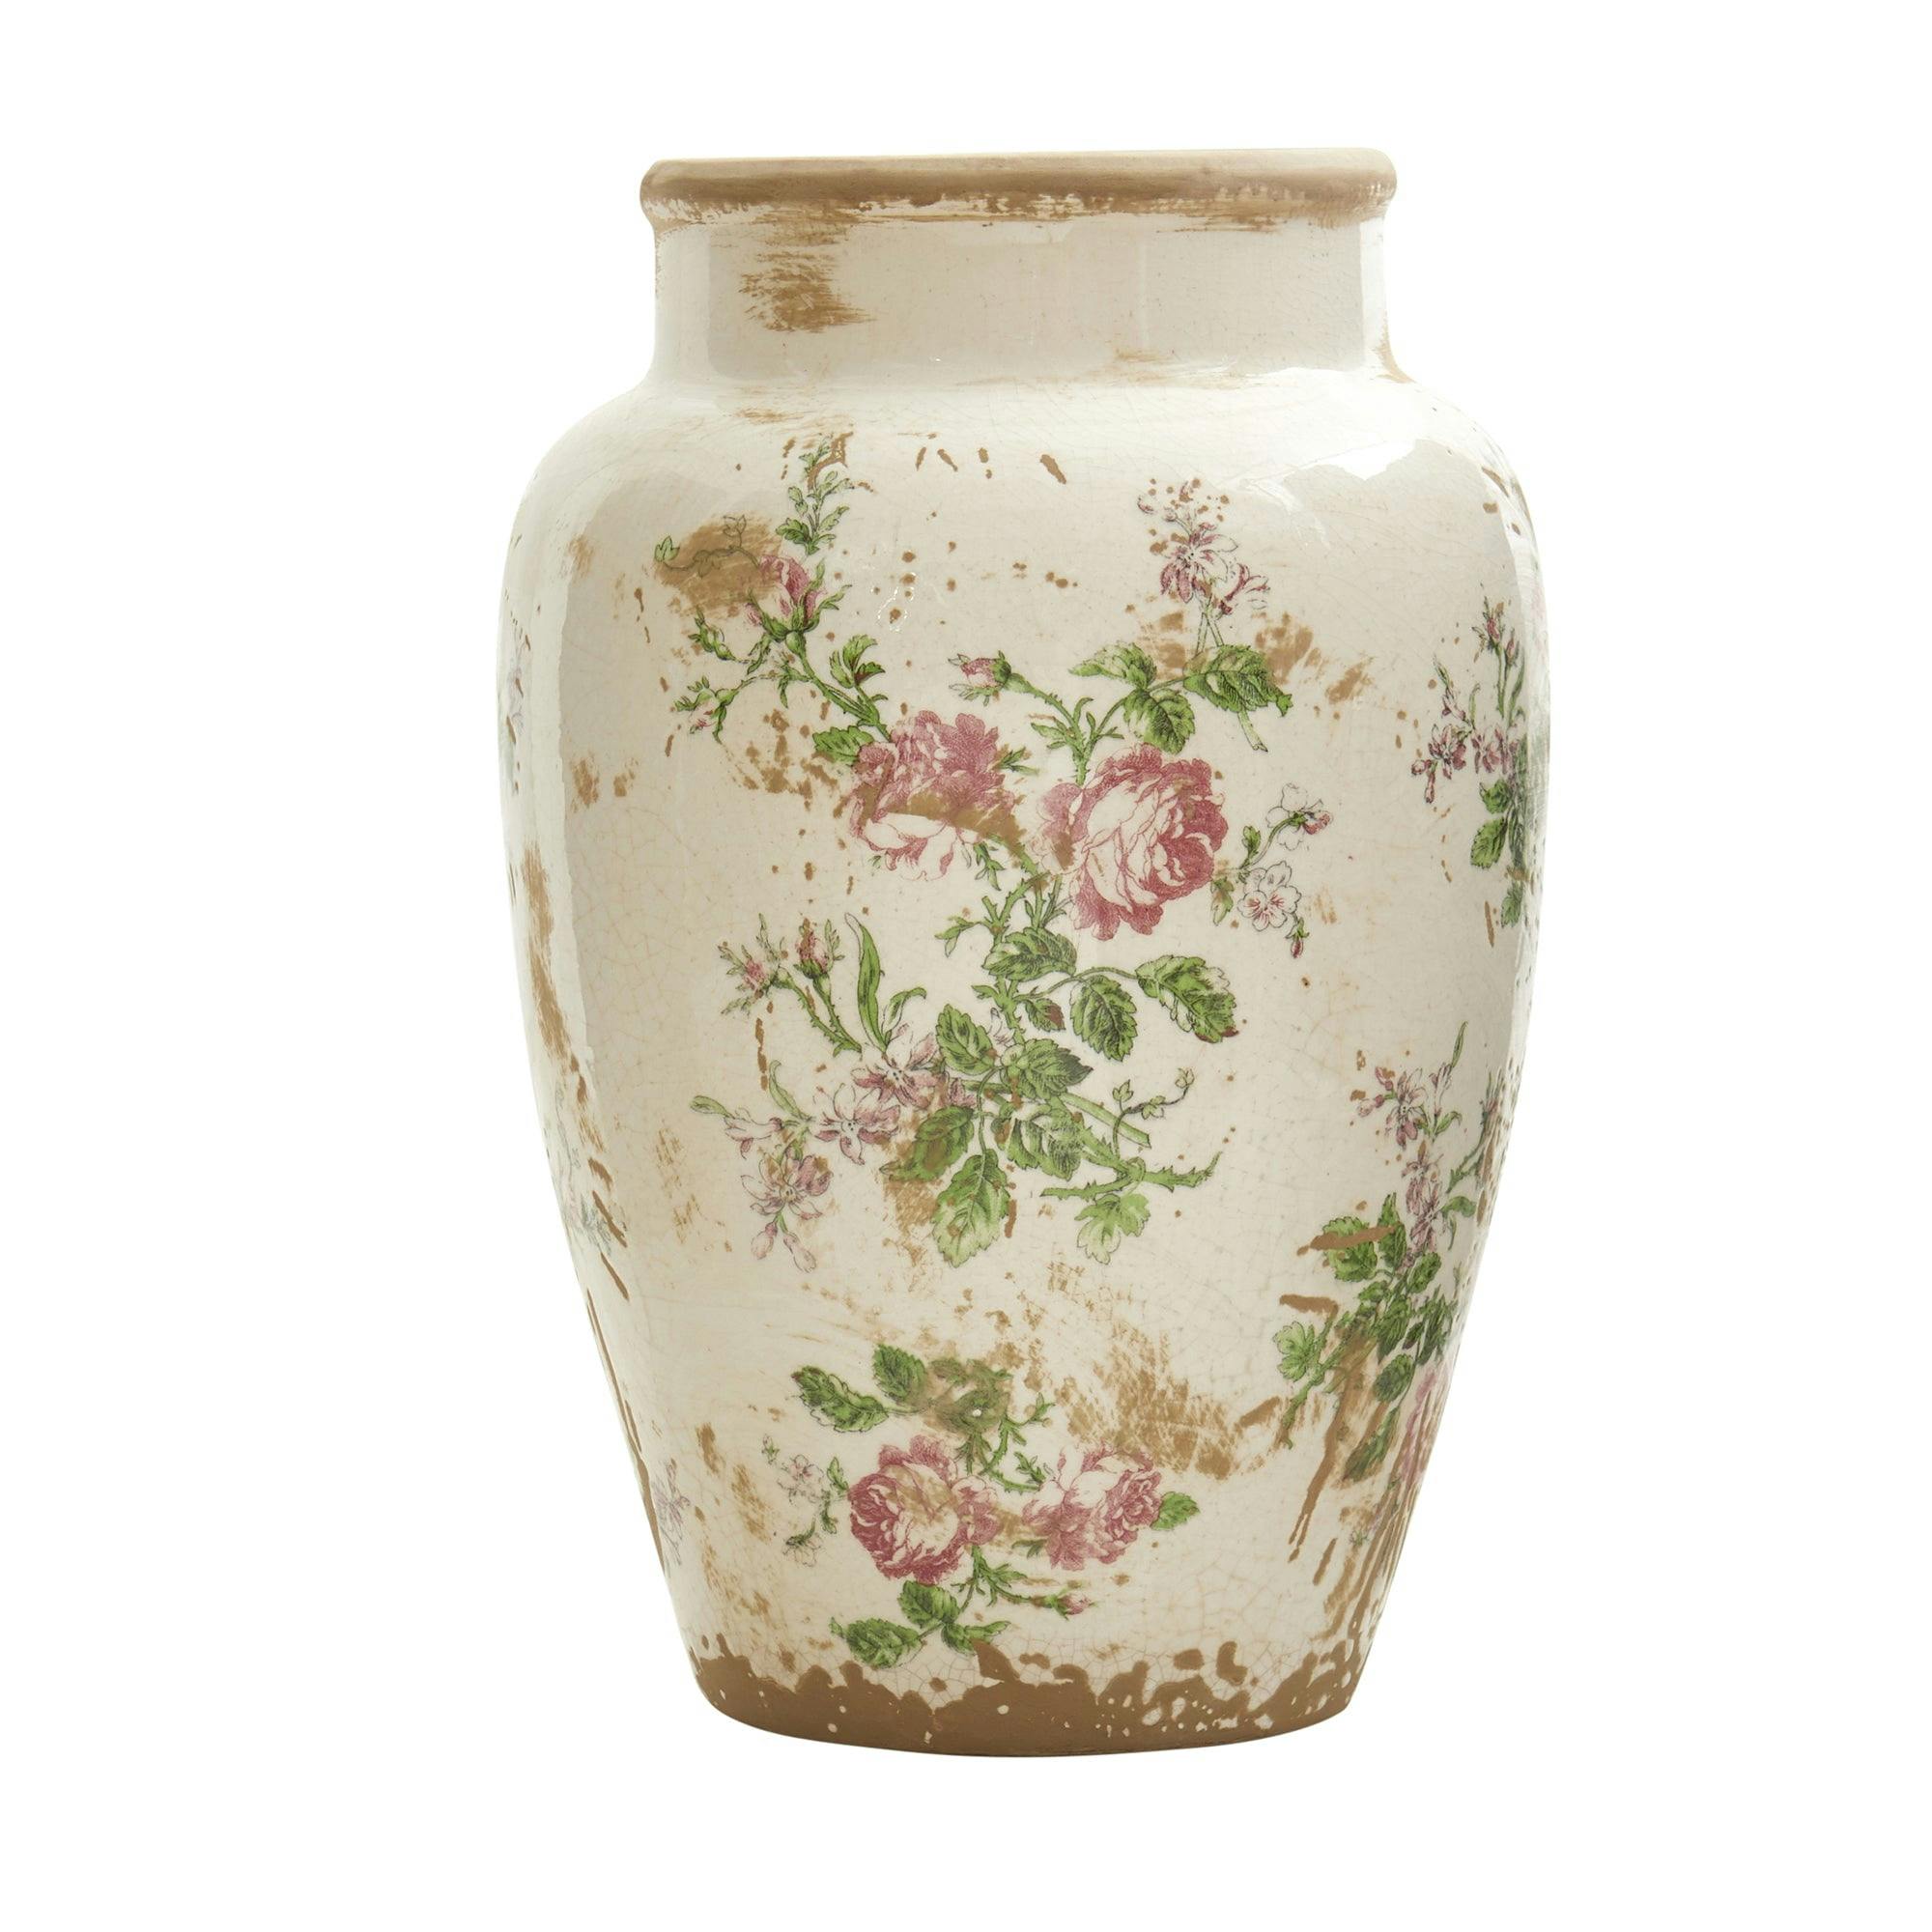 Modern White Ceramic Bottle Vase with Botanical Theme